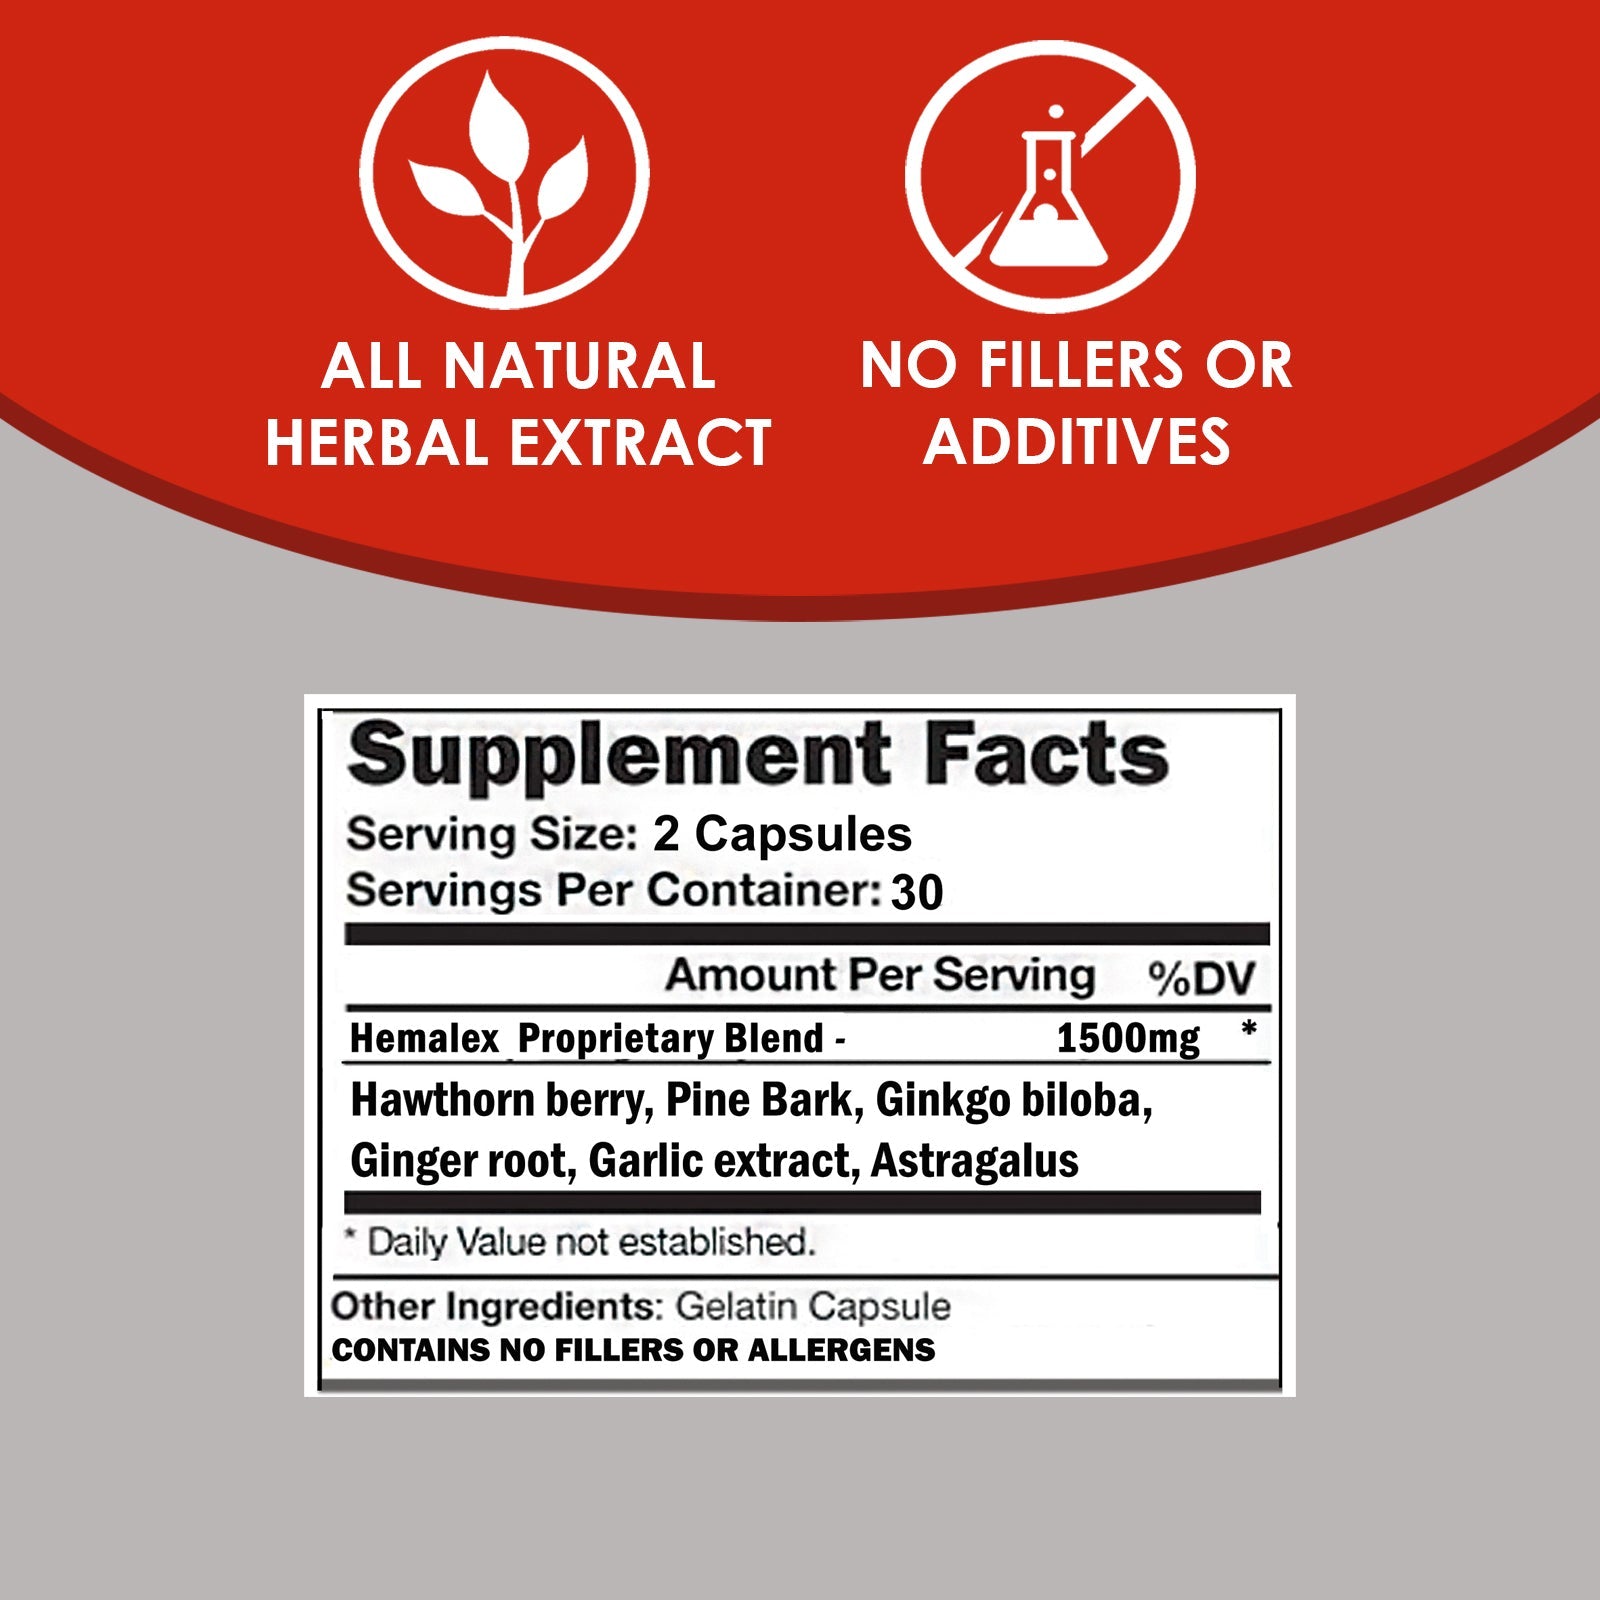 VH Nutrition HEMALEX | Cardiovascular Support* Supplement | Hawthorn Berry, Ginkgo Biloba, Astragalus | 1500mg Proprietary Formula | 60 Capsules